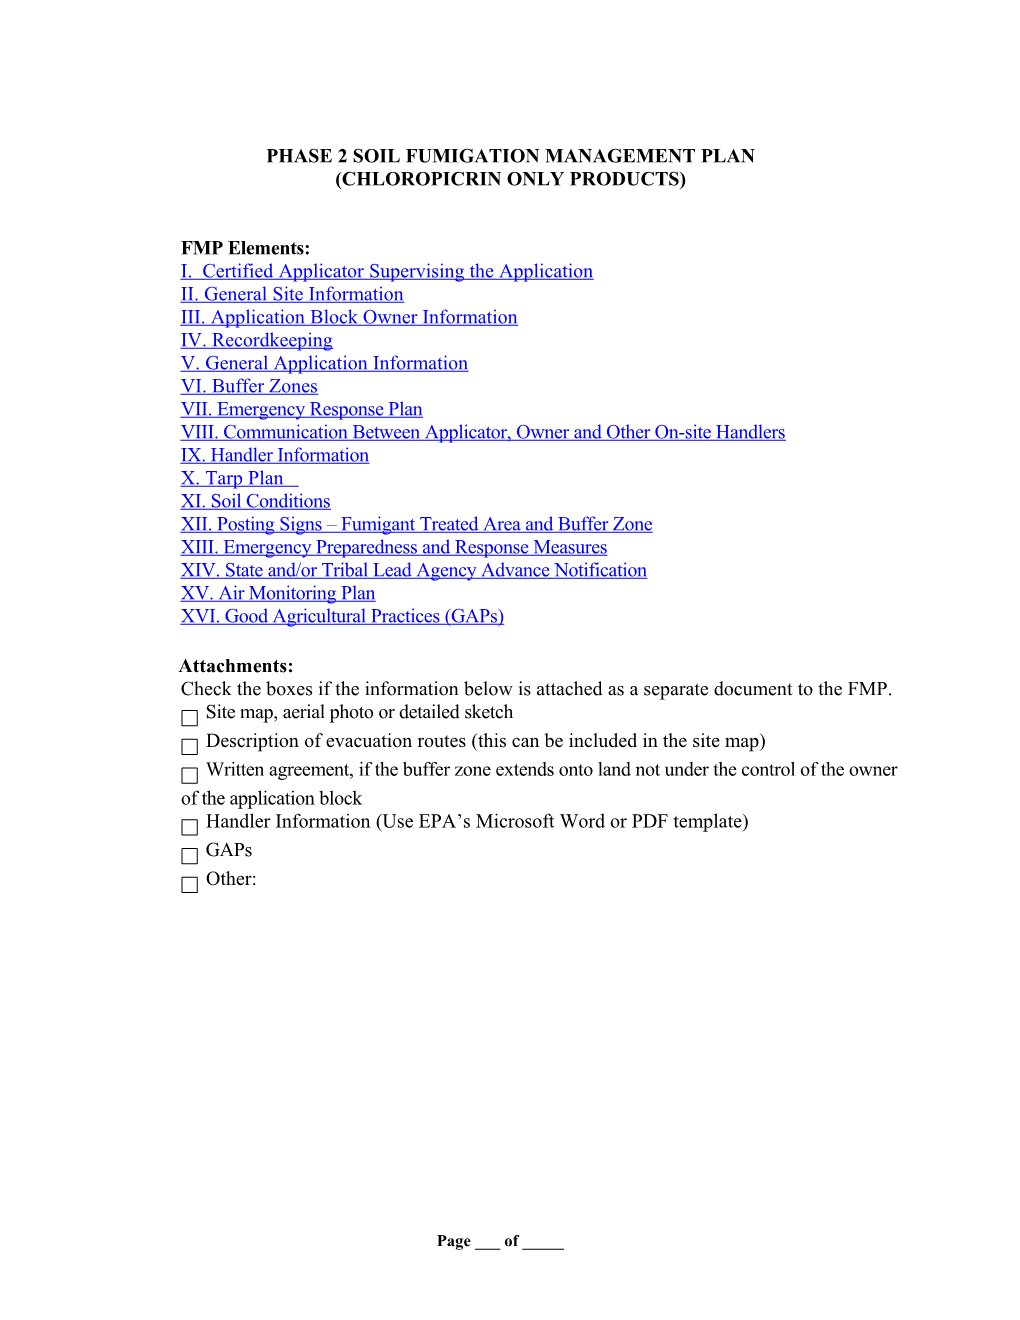 Fumigant Management Plan (5/12/10 Draft) s1